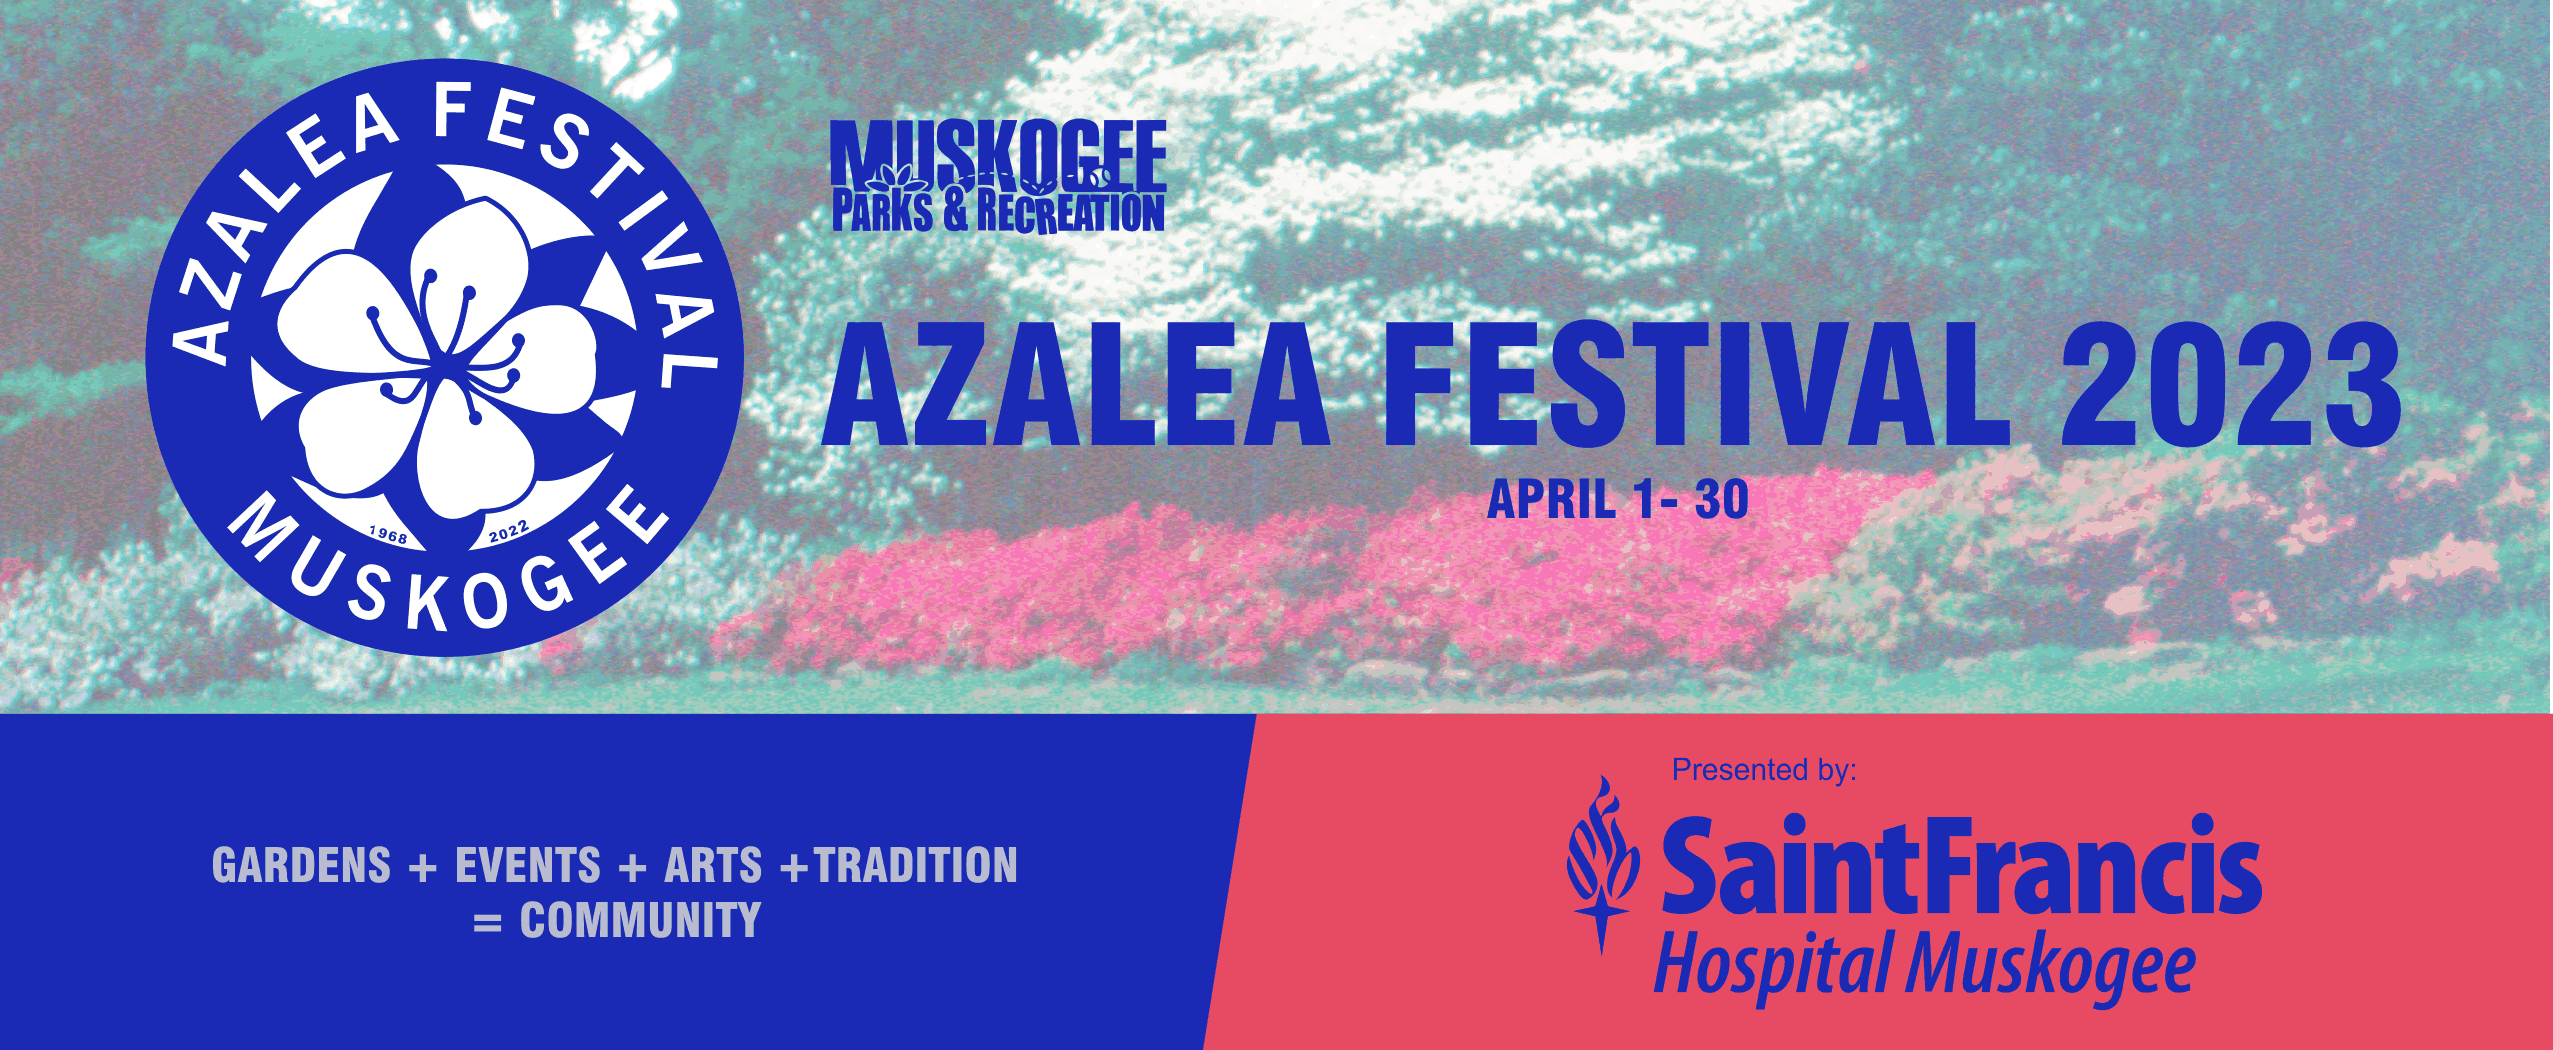 Azalea Festival Visit Muskogee